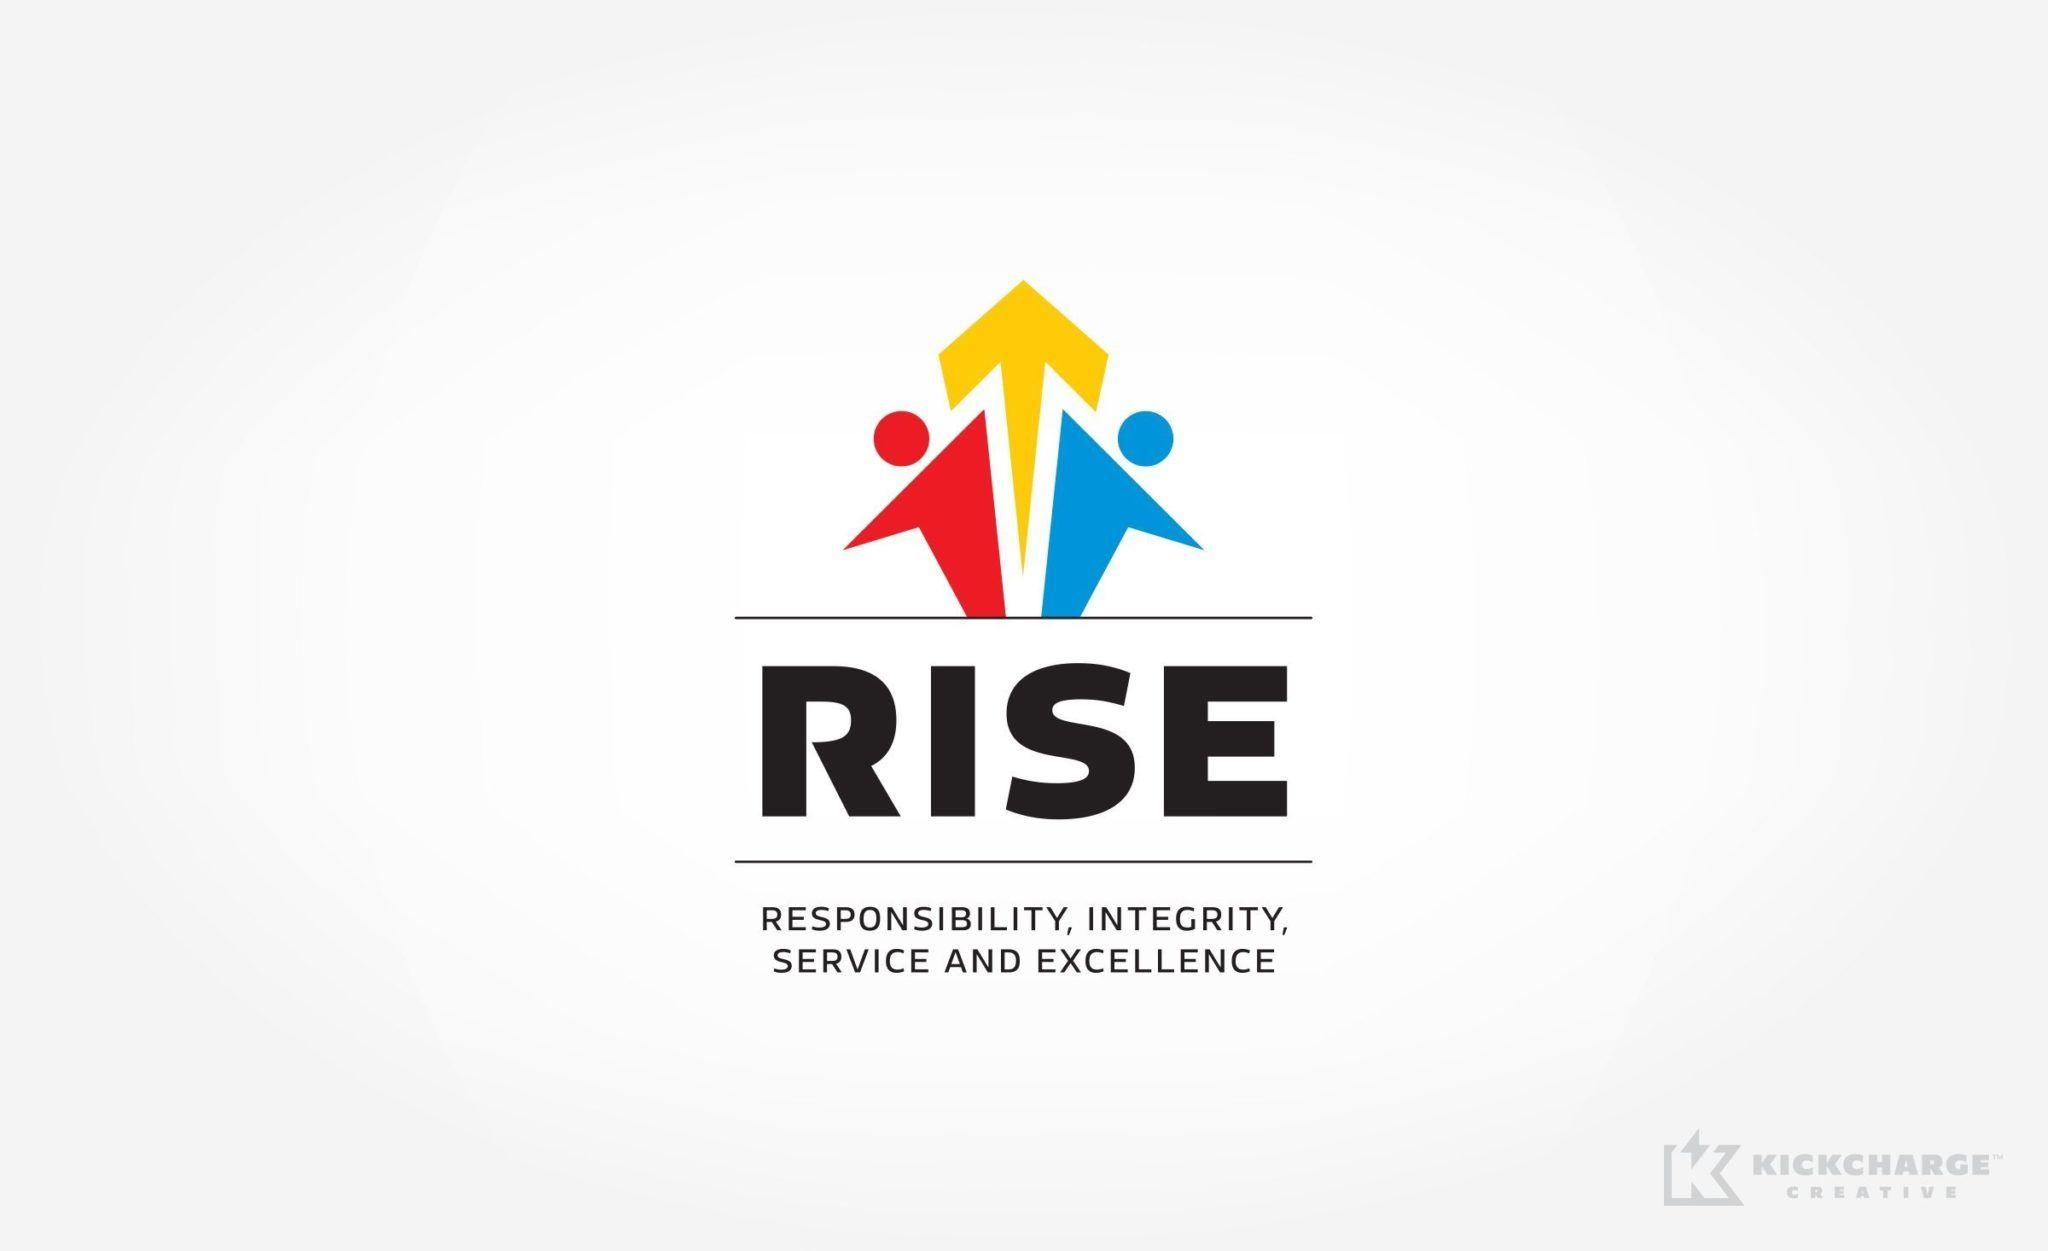 Rise Logo - RISE - KickCharge Creative | kickcharge.com | KickCharge Creative ...